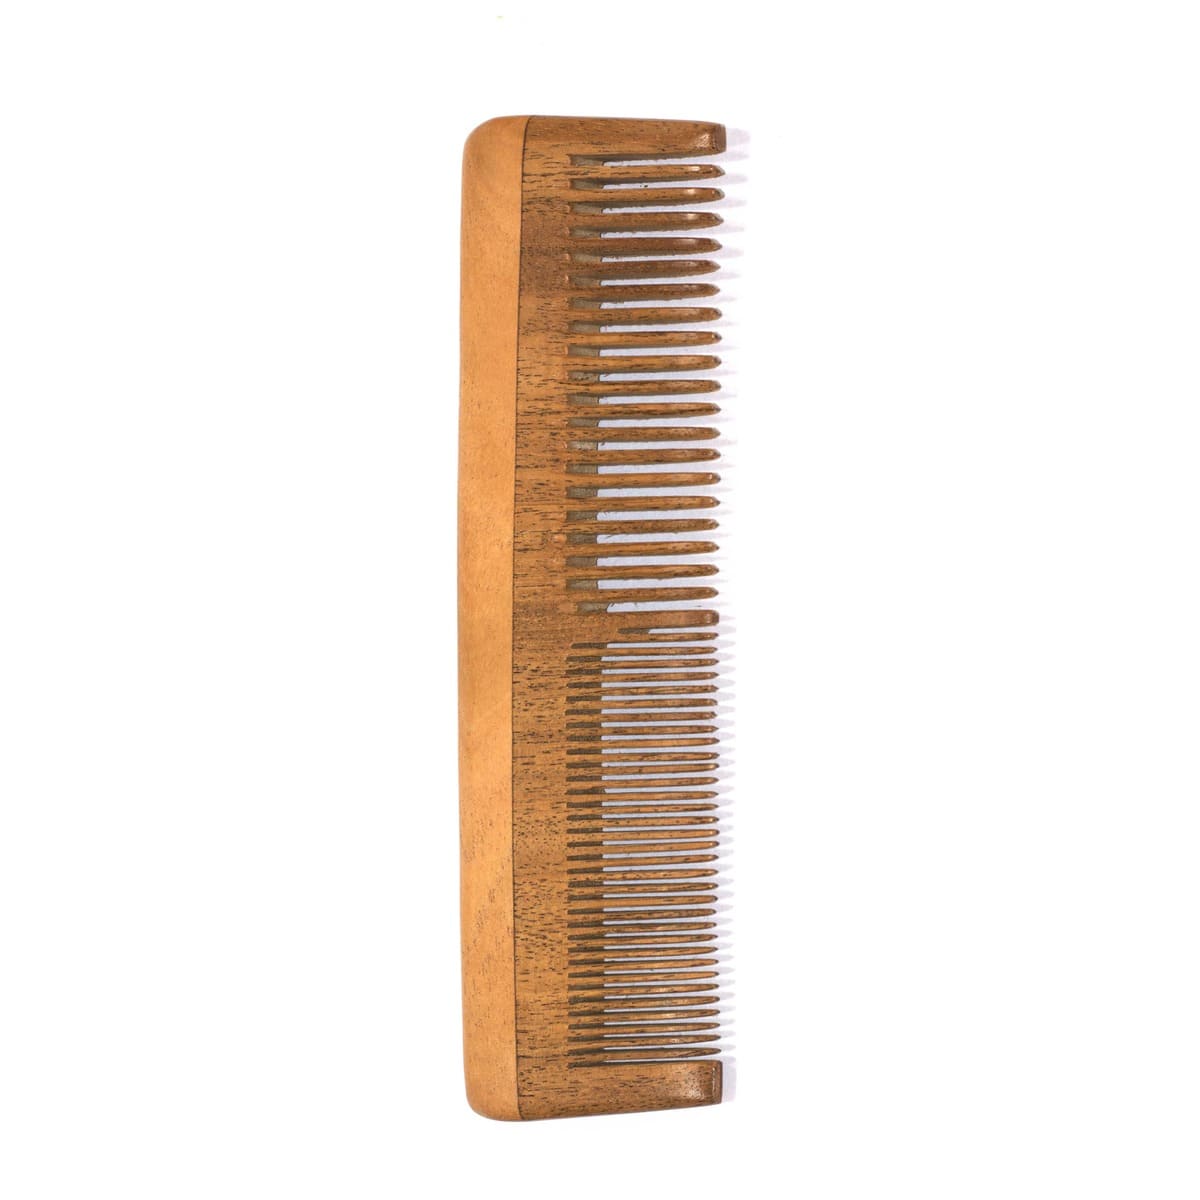 Product: Geosmin Neem Wood Comb – Double Tooth